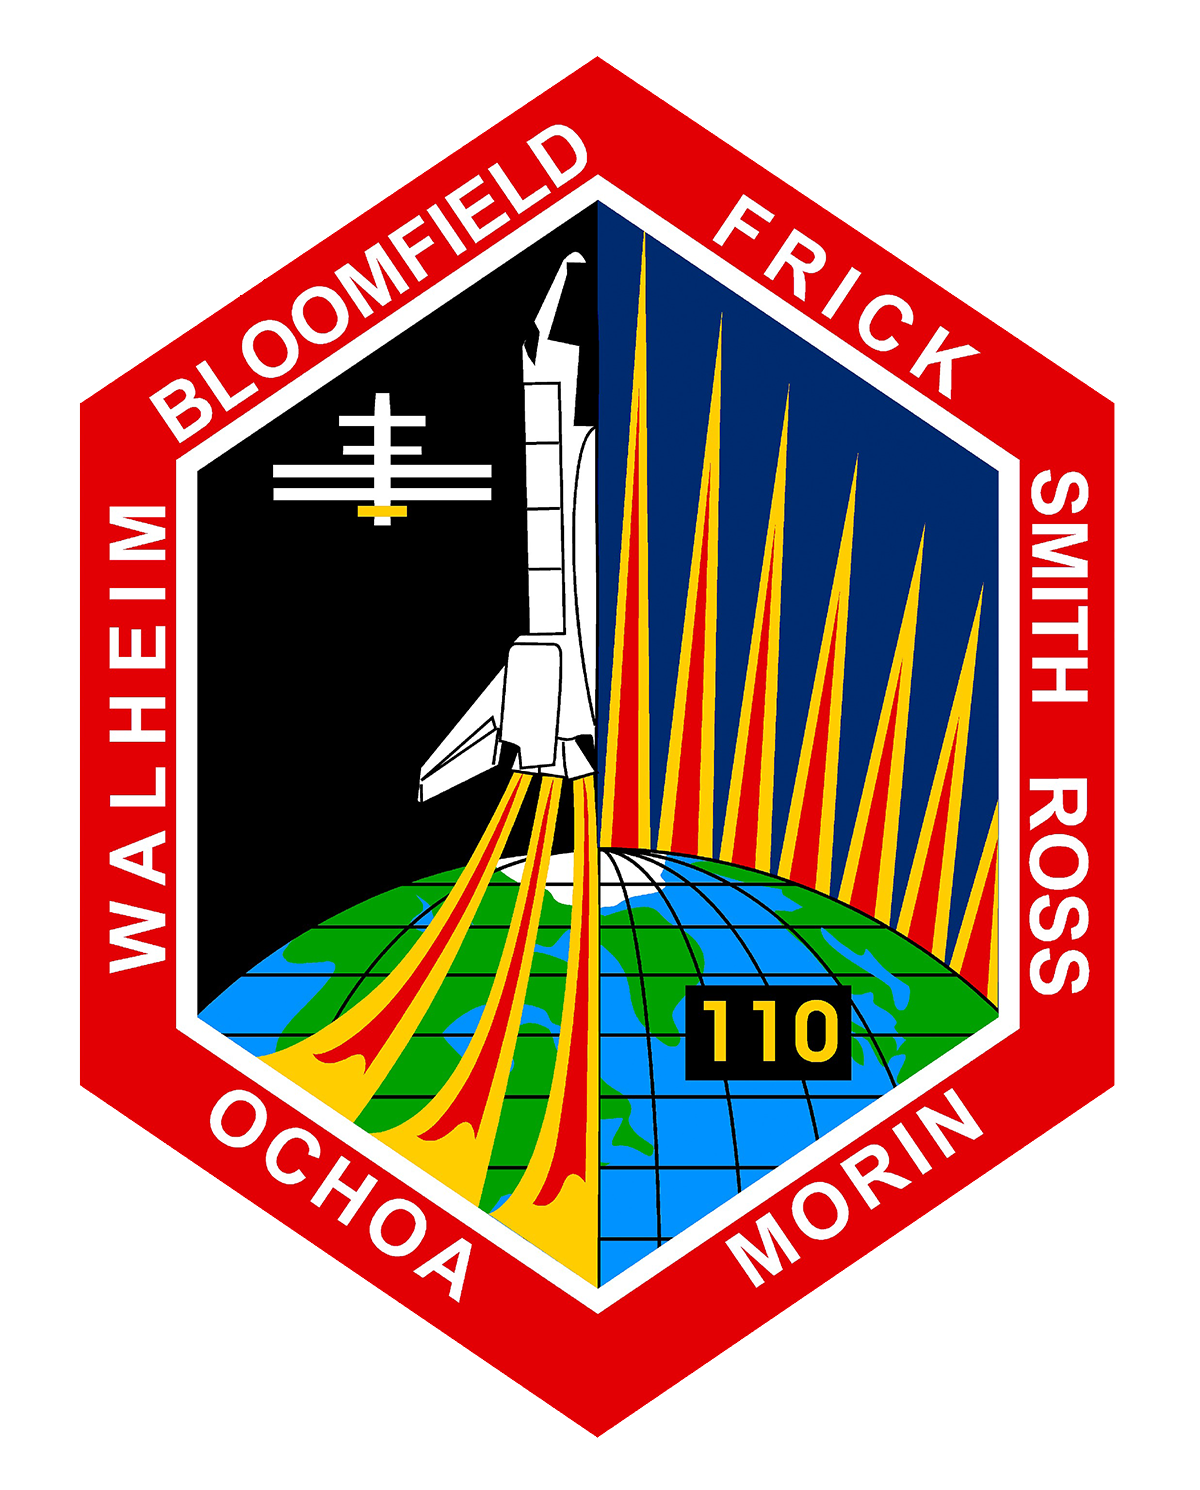 STS-110 (Atlantis)